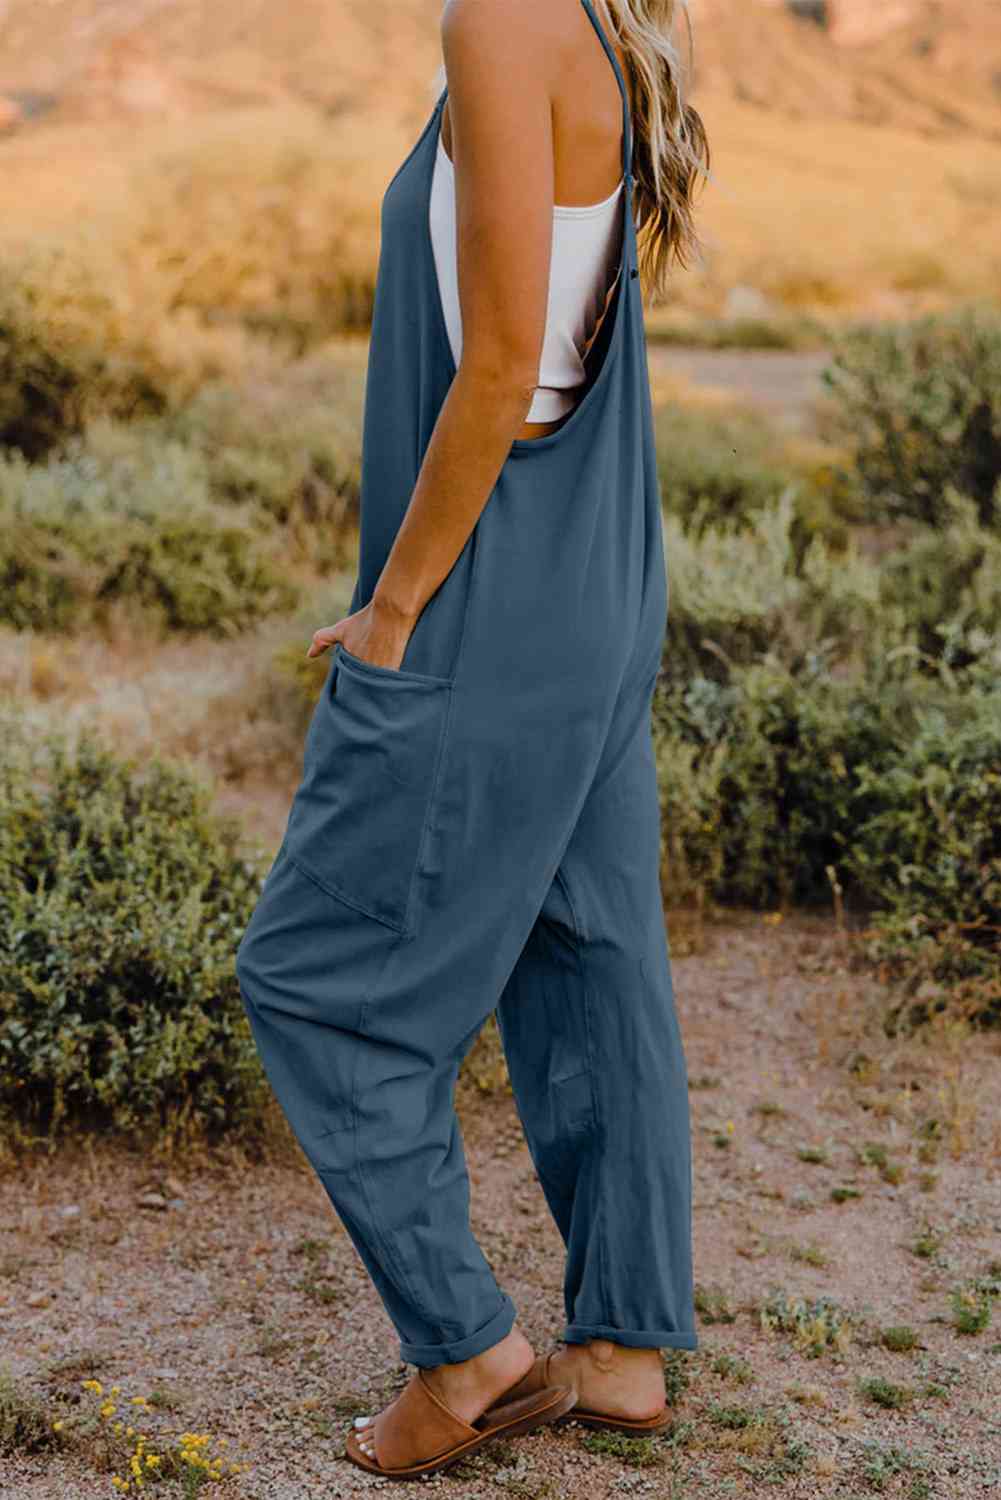 TEEK - Varied Color V-Neck Sleeveless Jumpsuit with Pocket OVERALLS TEEK Trend   